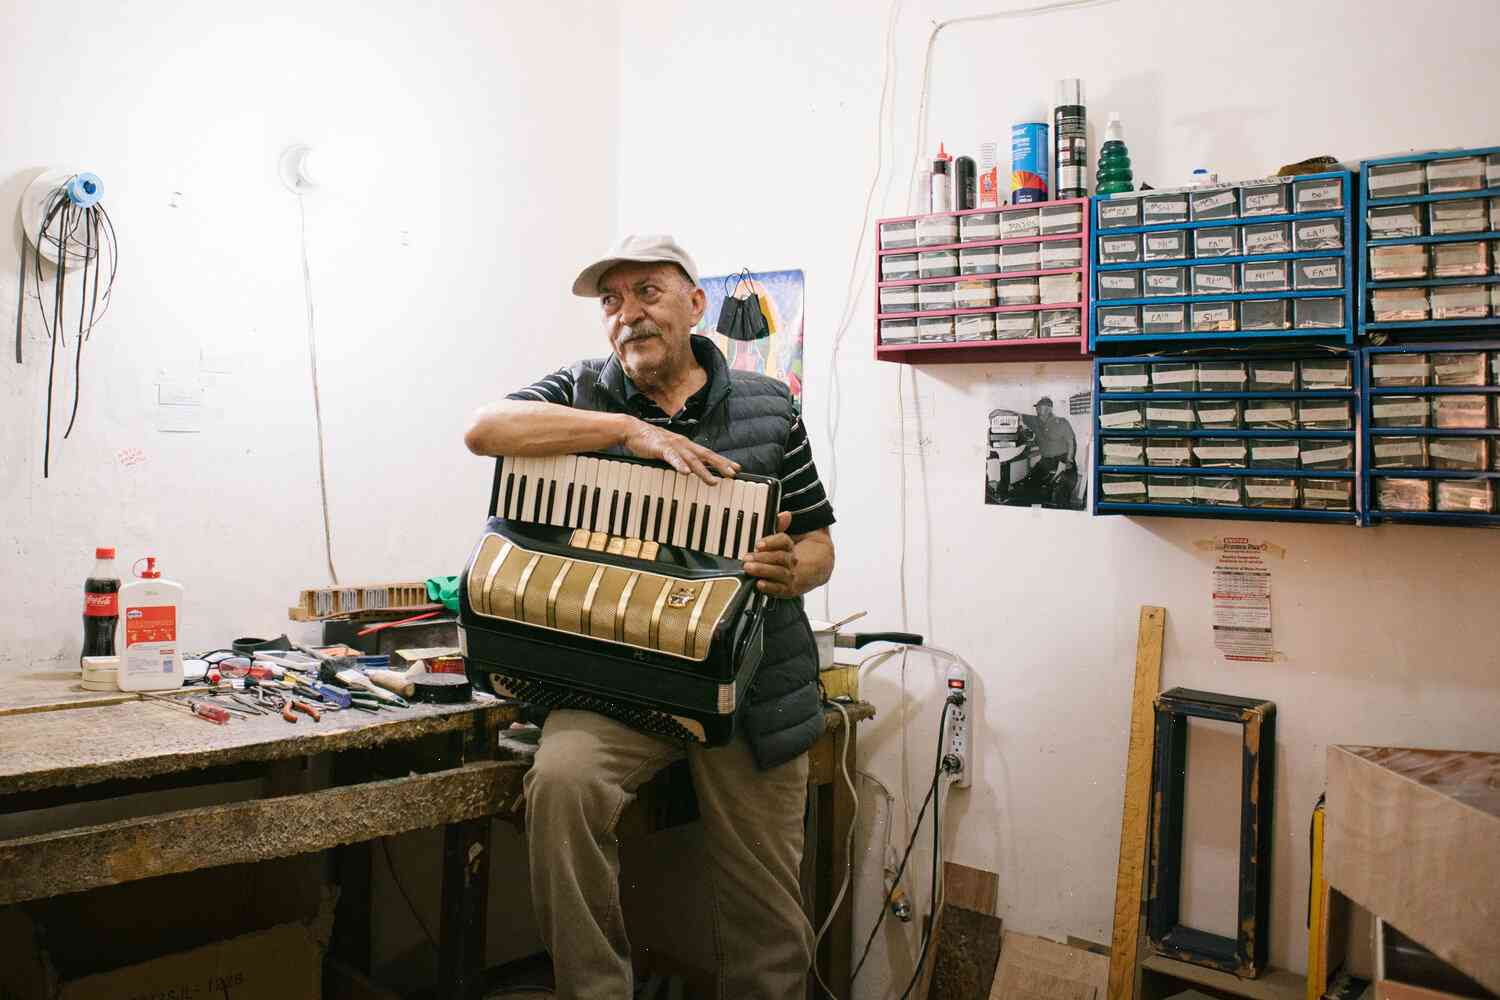 How Oaxaca's Romeros rebuild their love of music